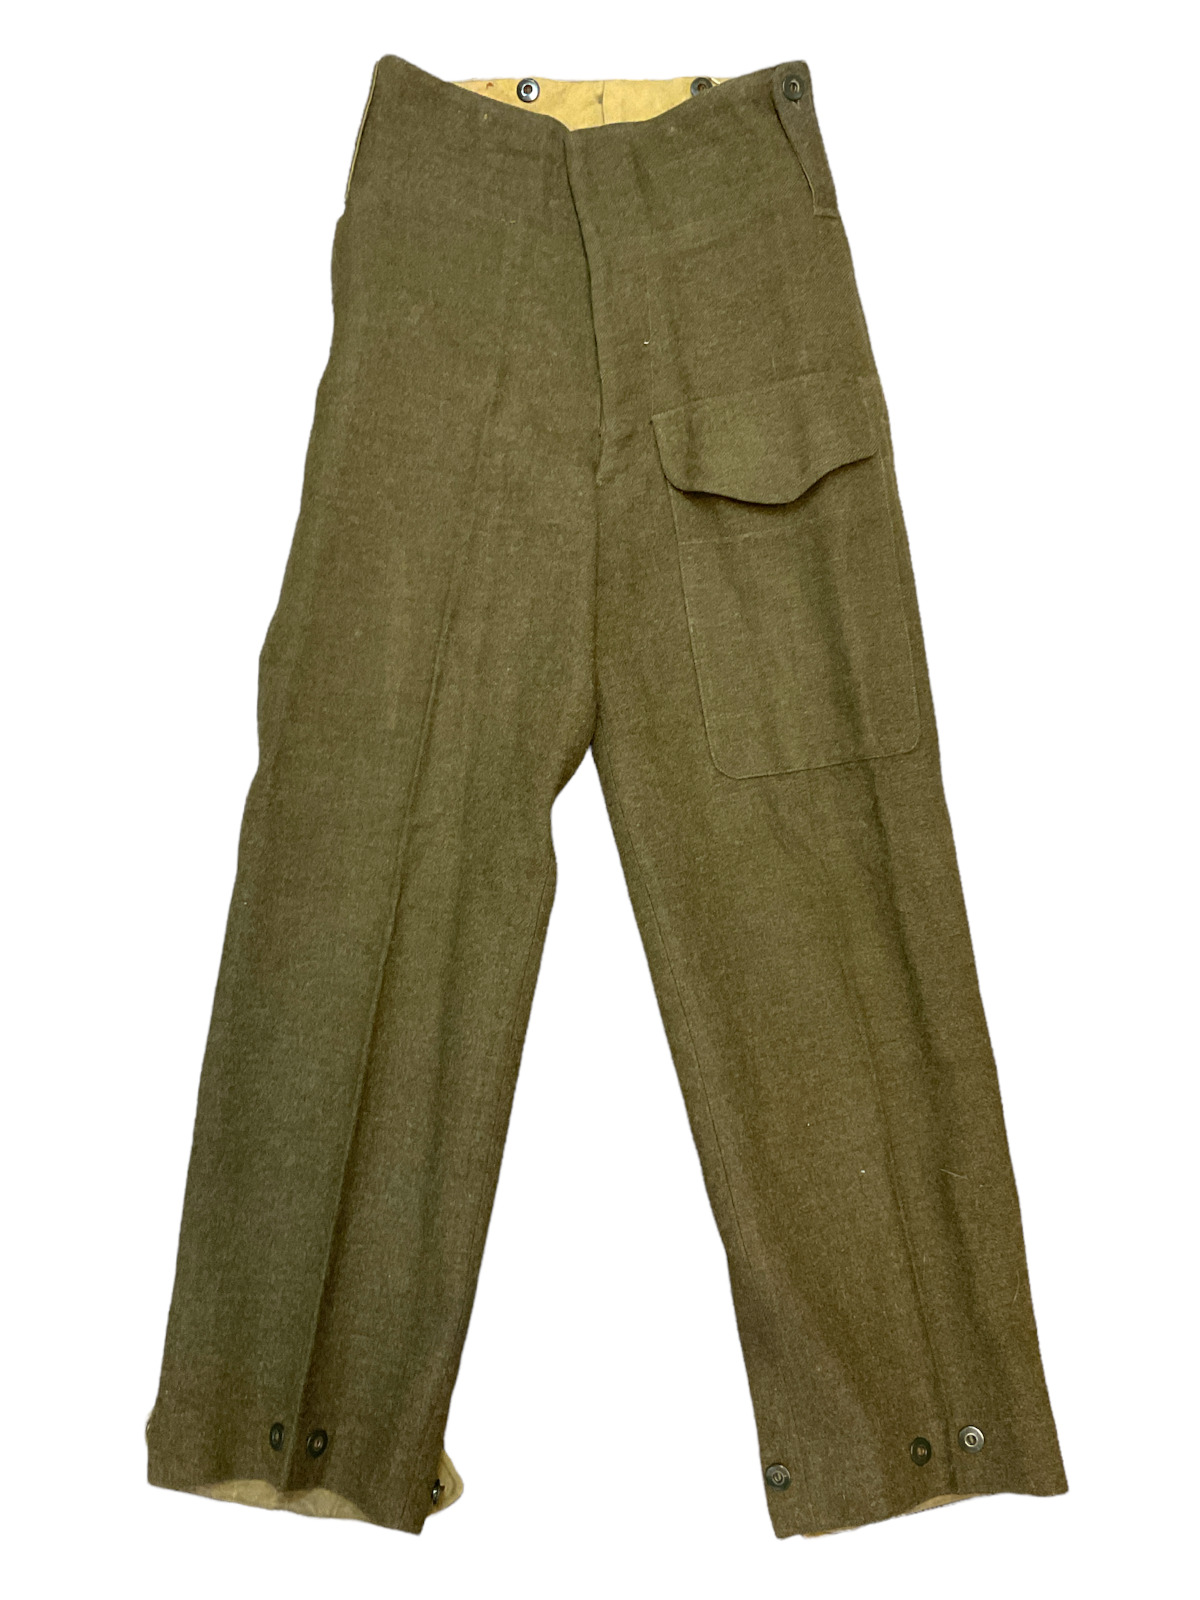 Canadian 1964 Dated Battledress Trousers Size Ex Small Waist 28